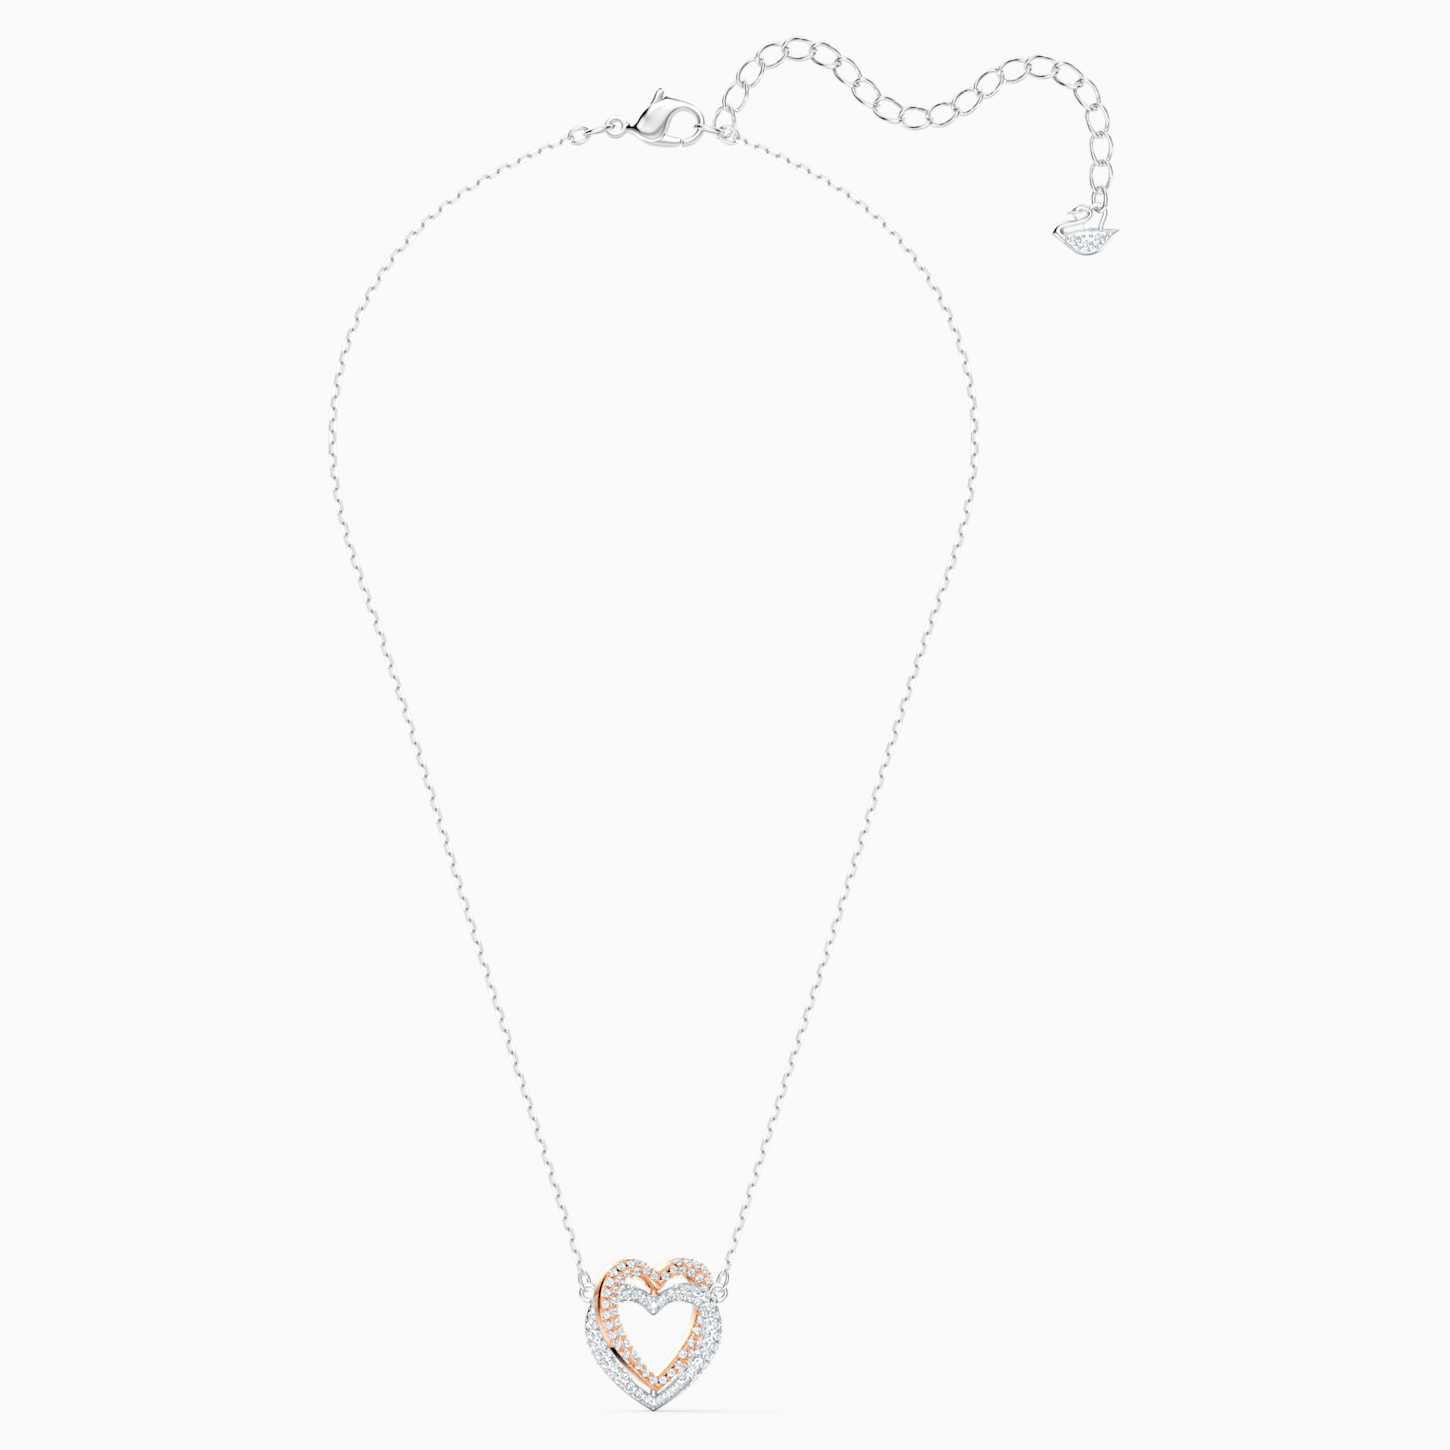 Swarovski Infinity Double Heart Necklace, White, Mixed metal finish ...